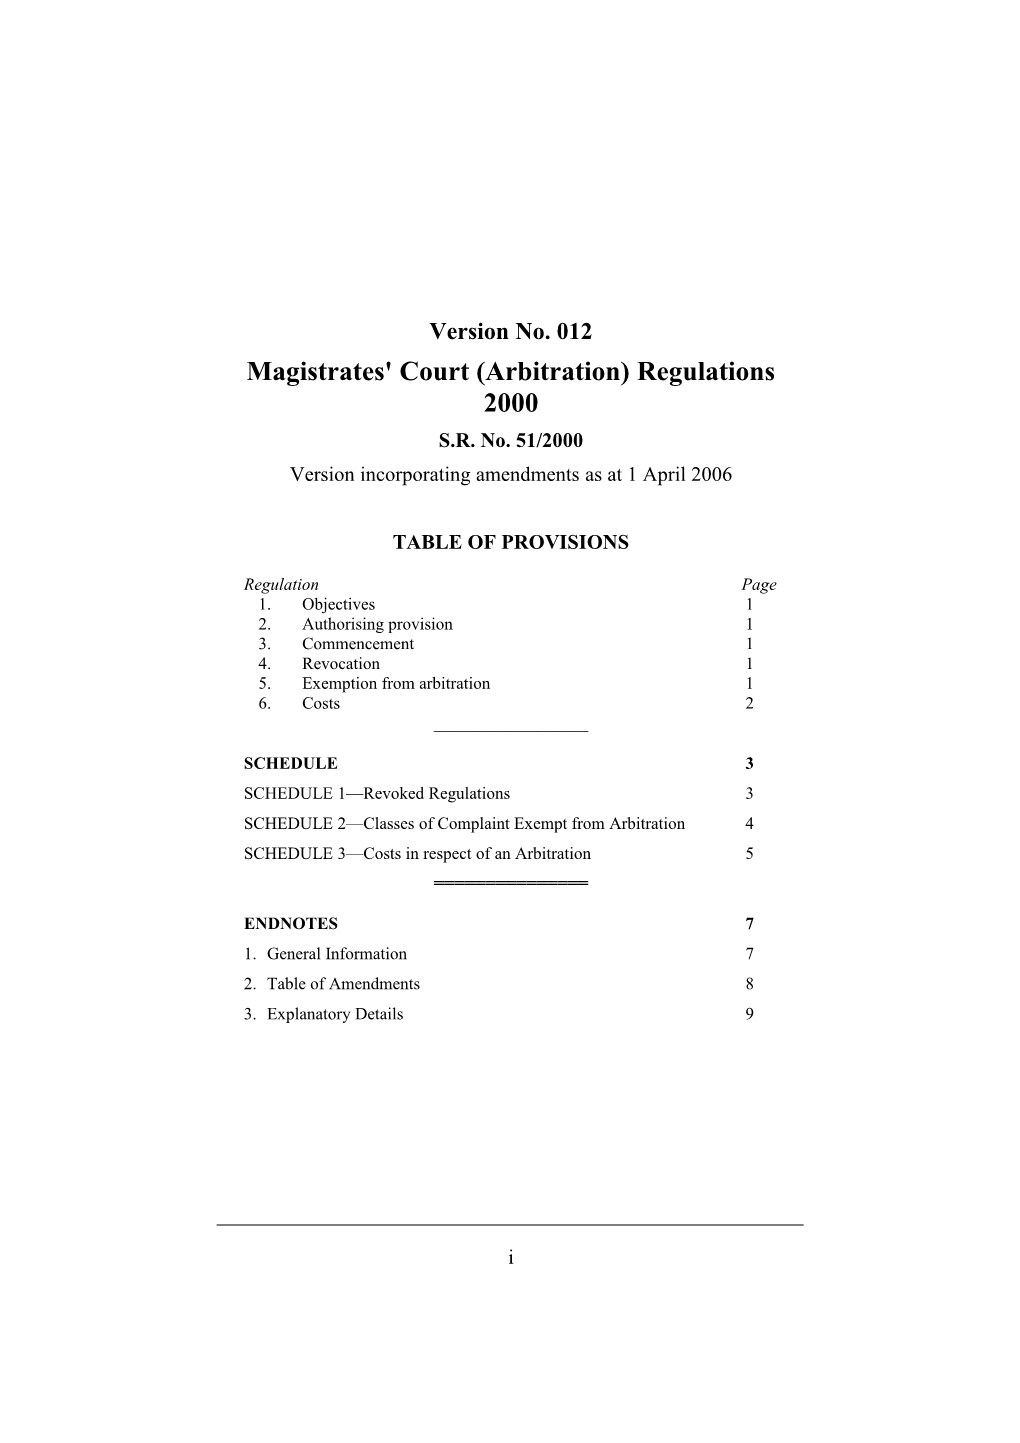 Magistrates' Court (Arbitration) Regulations 2000